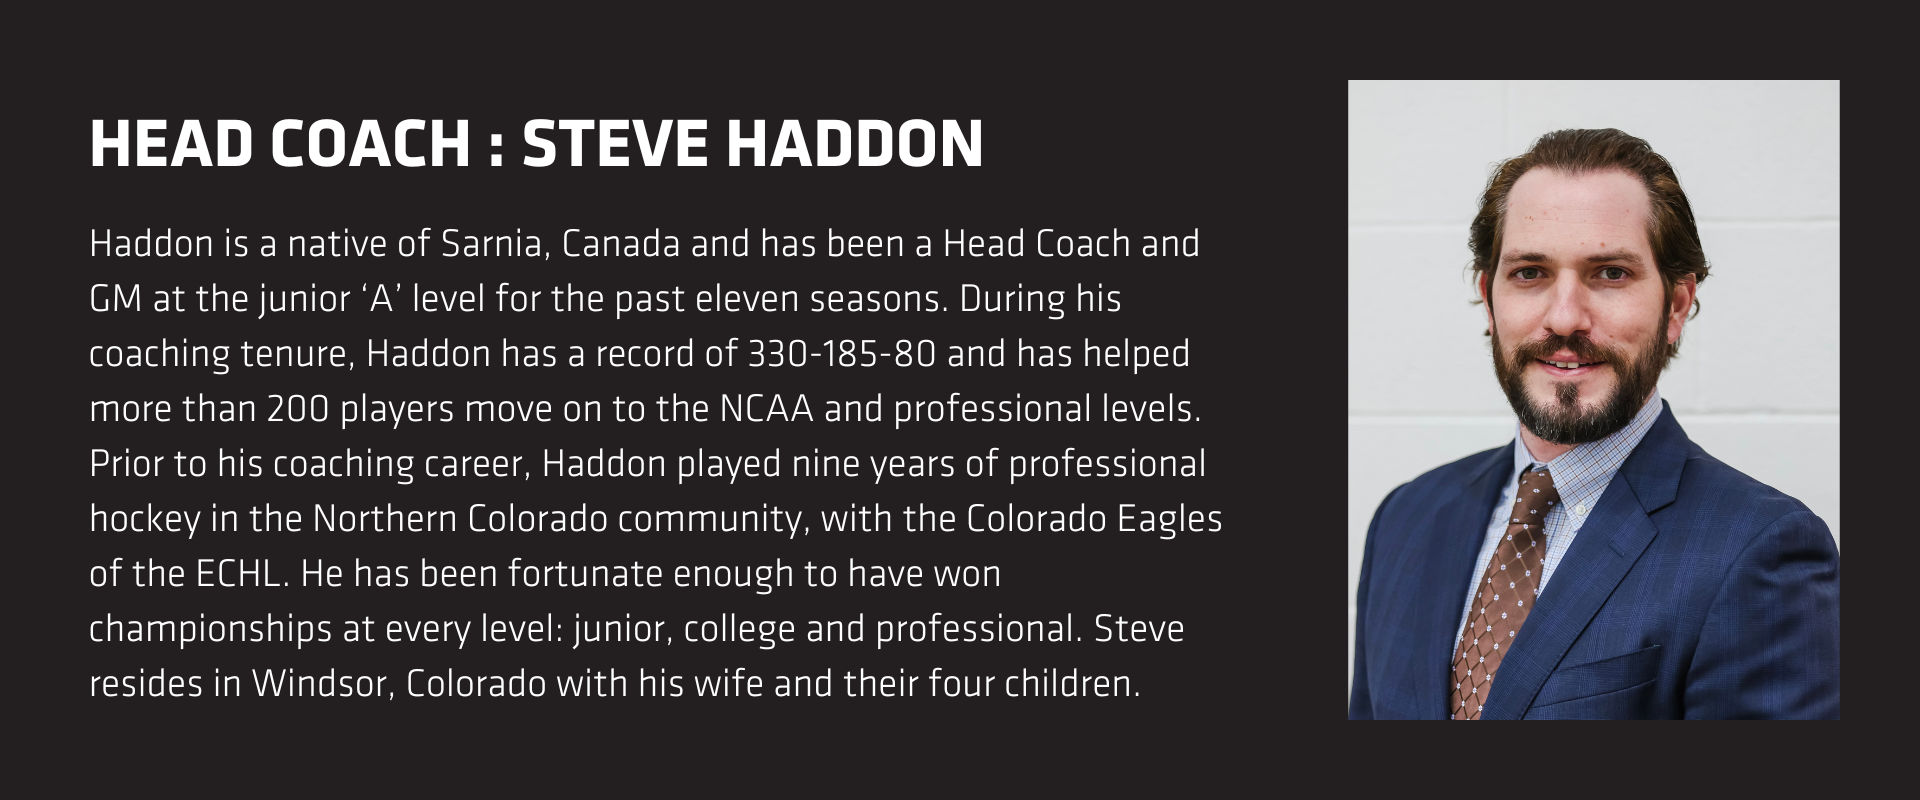 Head Coach: Steve Haddon